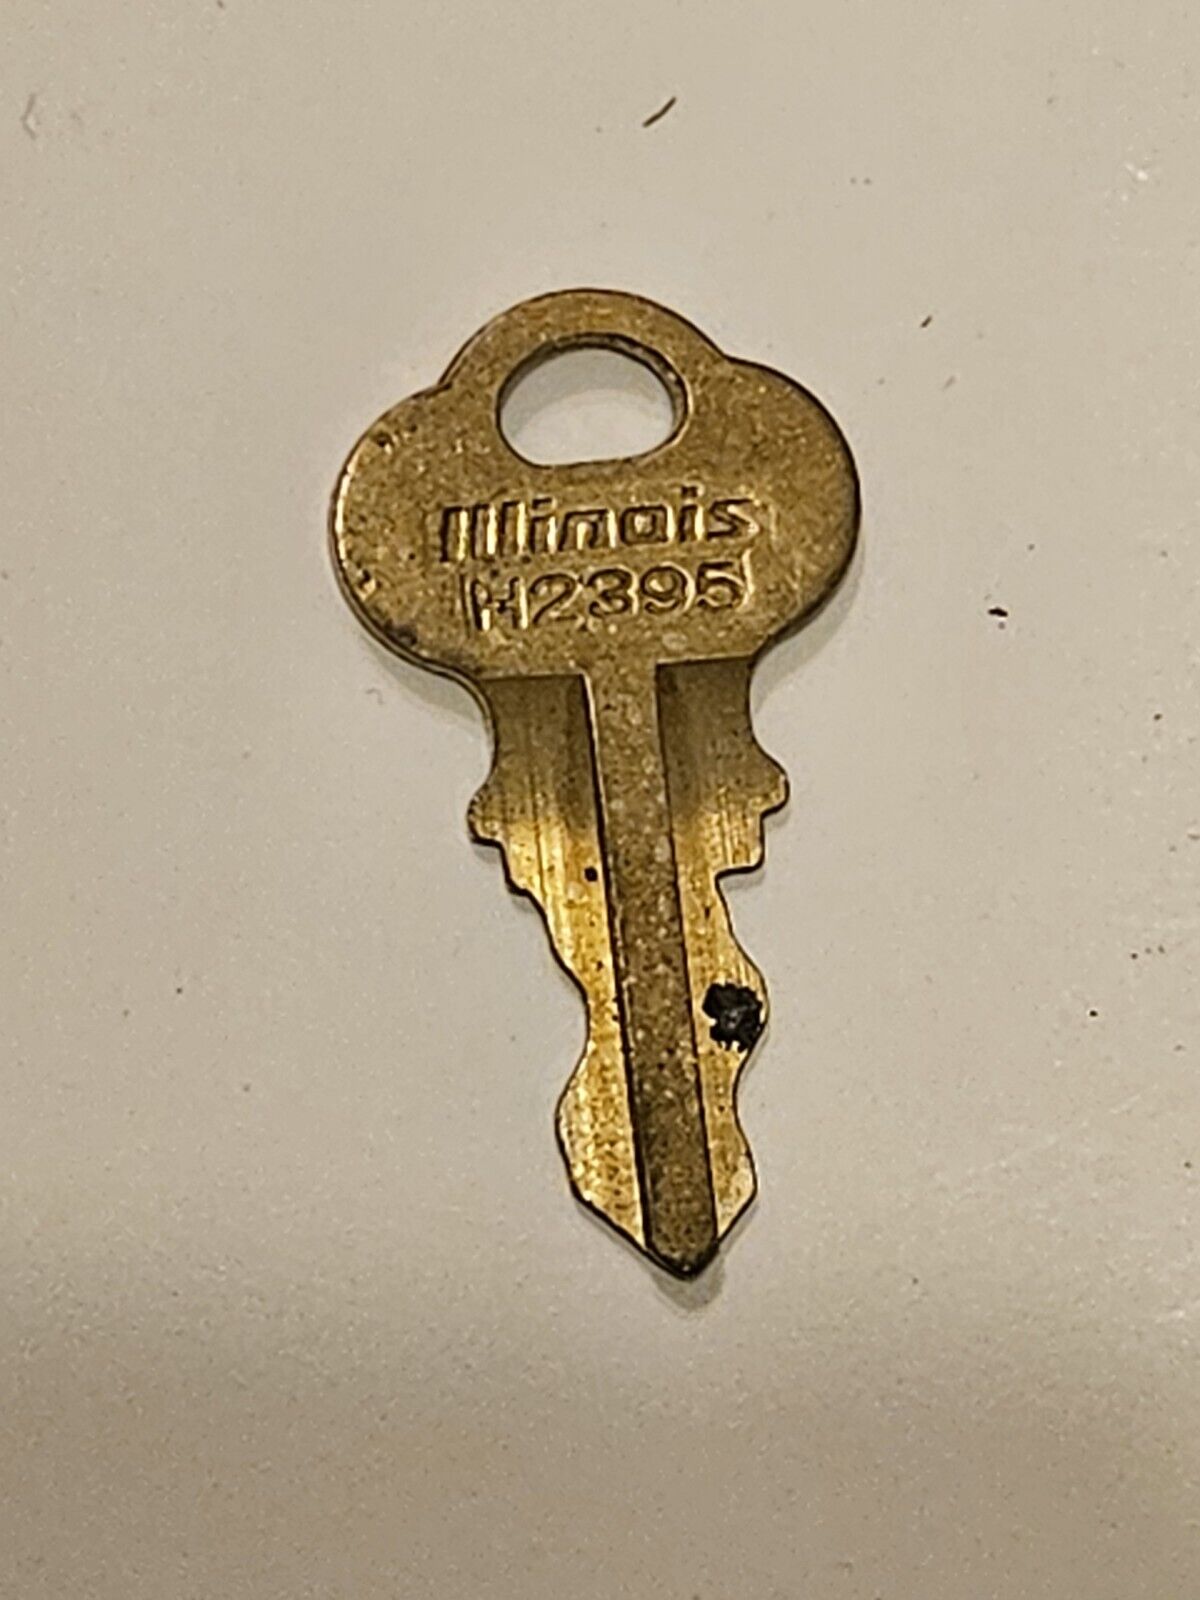 Chicago lock co Dover vintage key H2395